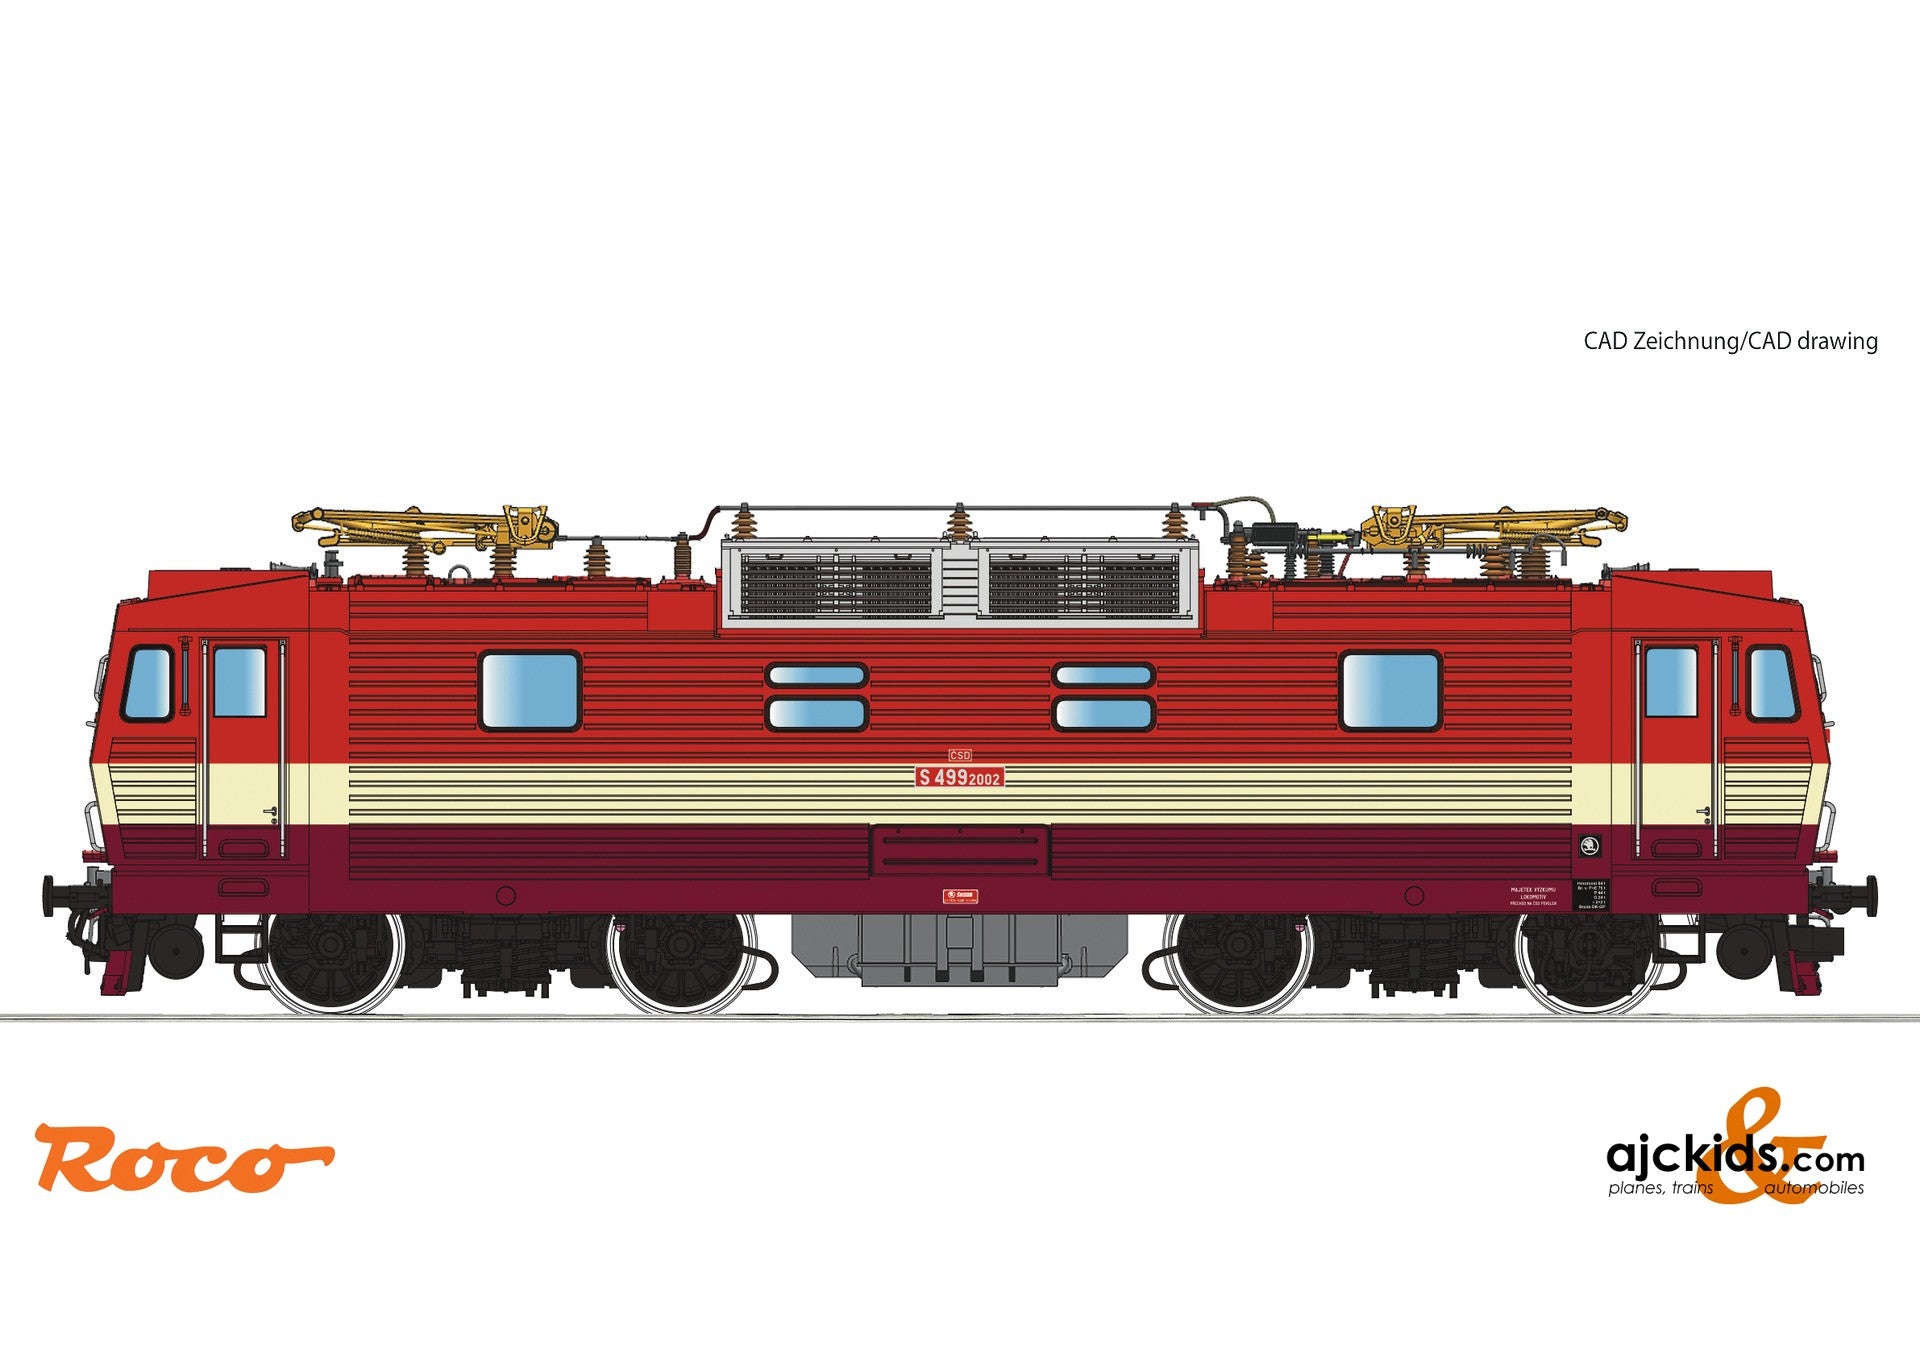 Roco 71238 -Electric locomotive S 499.2002, CSD